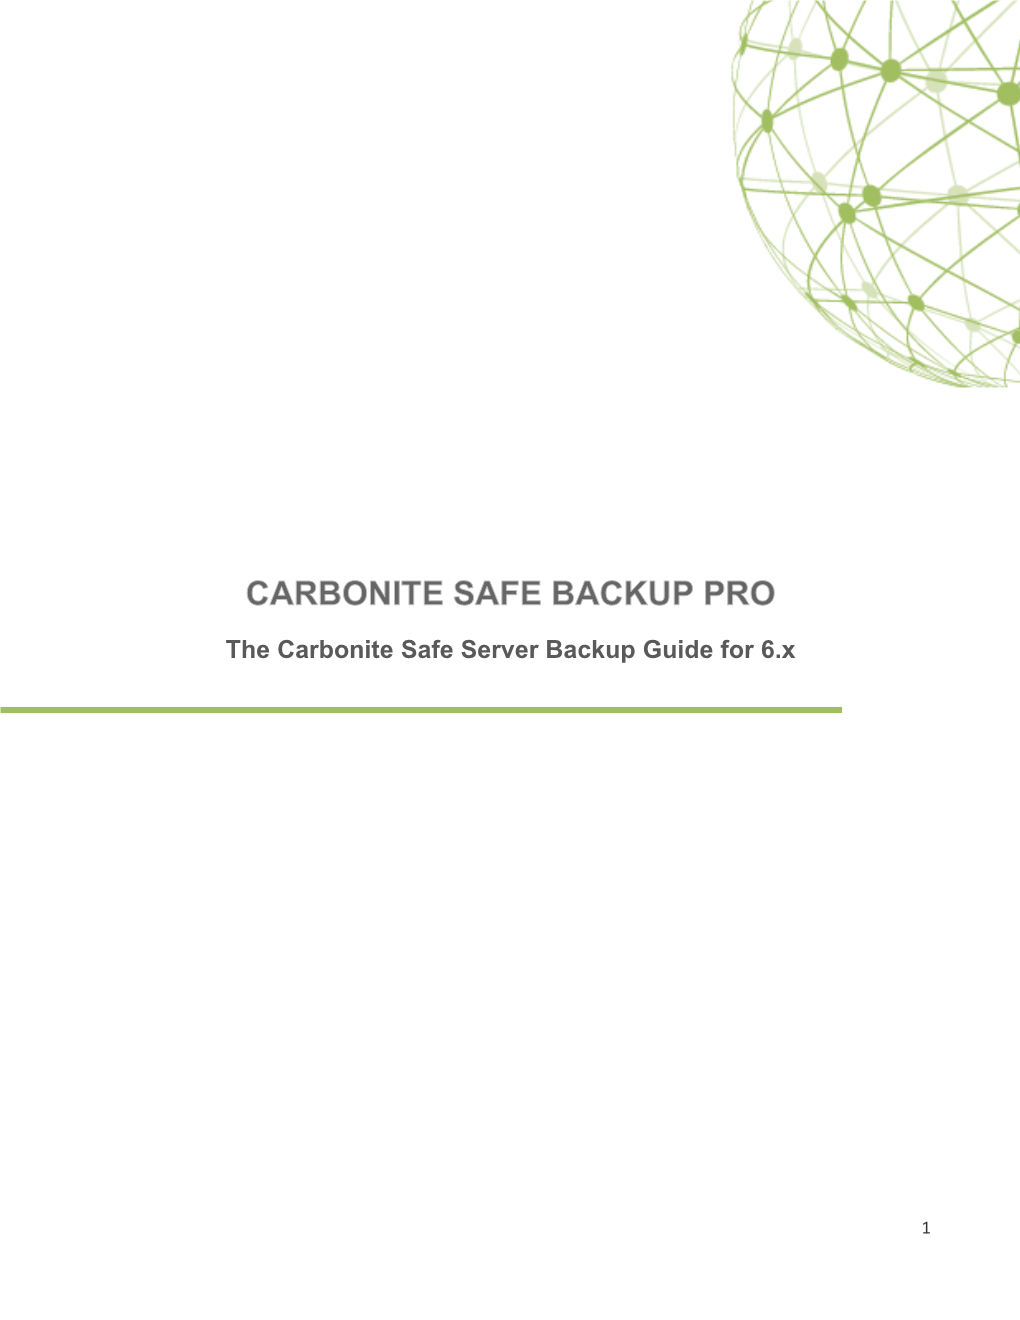 The Carbonite Safe Server Backup Guide for 6.X